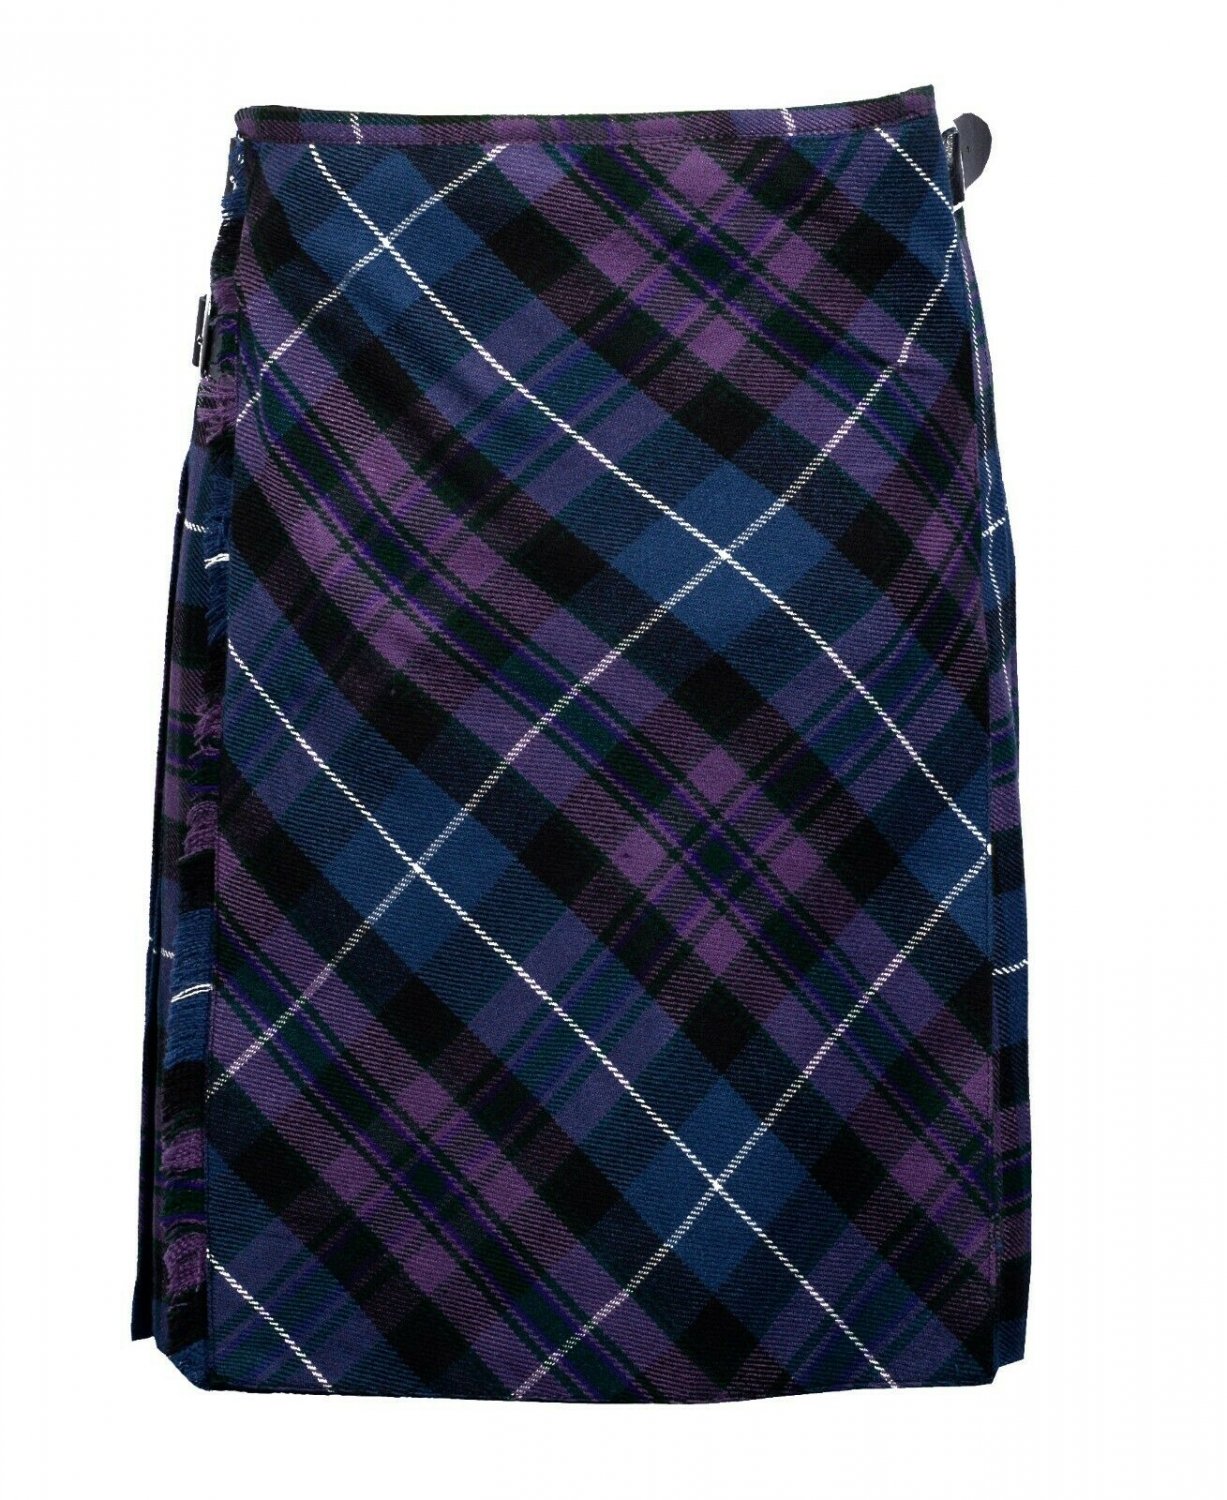 58 inches waist Bias Apron Traditional 5 Yard Scottish Kilt for Men ...